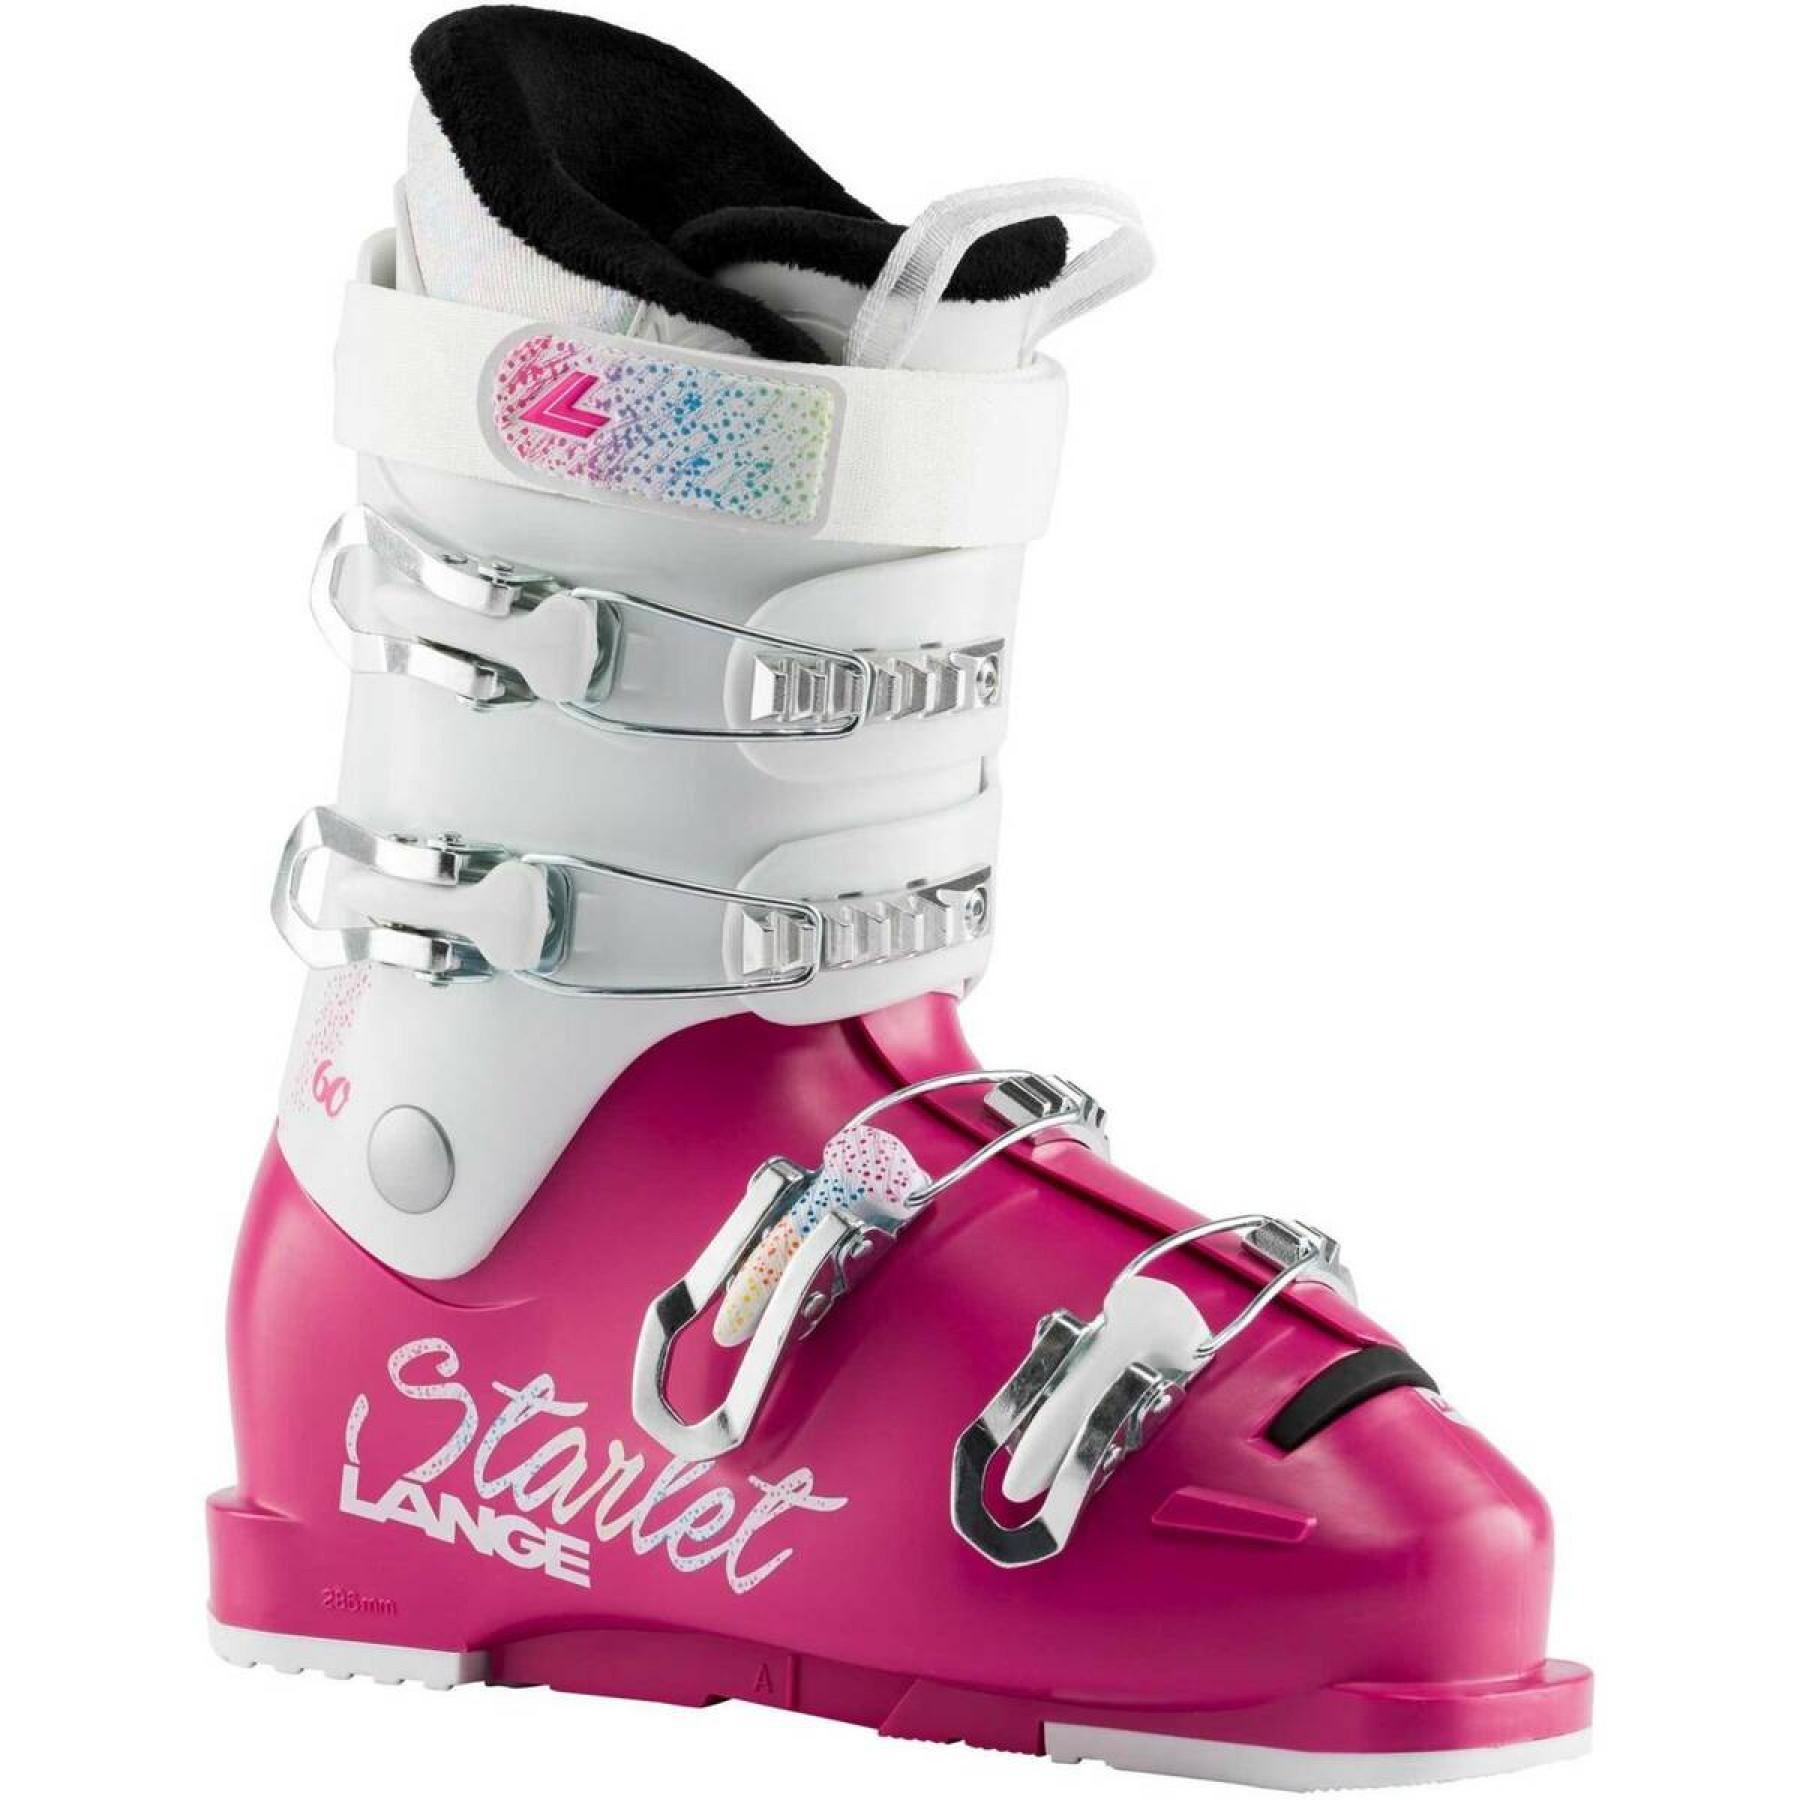 Children's ski boots Lange starlet 60